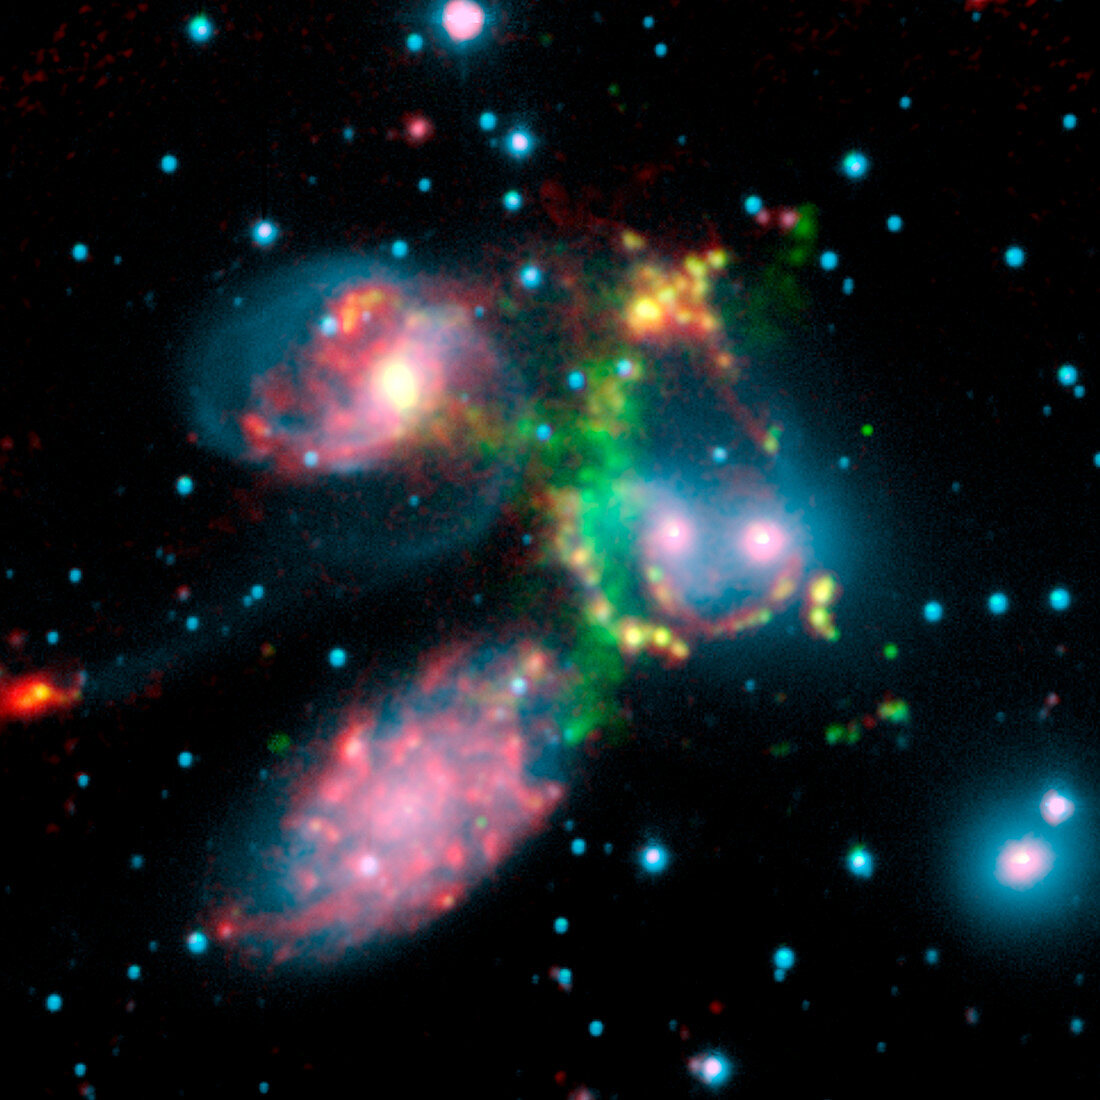 Stephan's Quintet,colliding galaxies